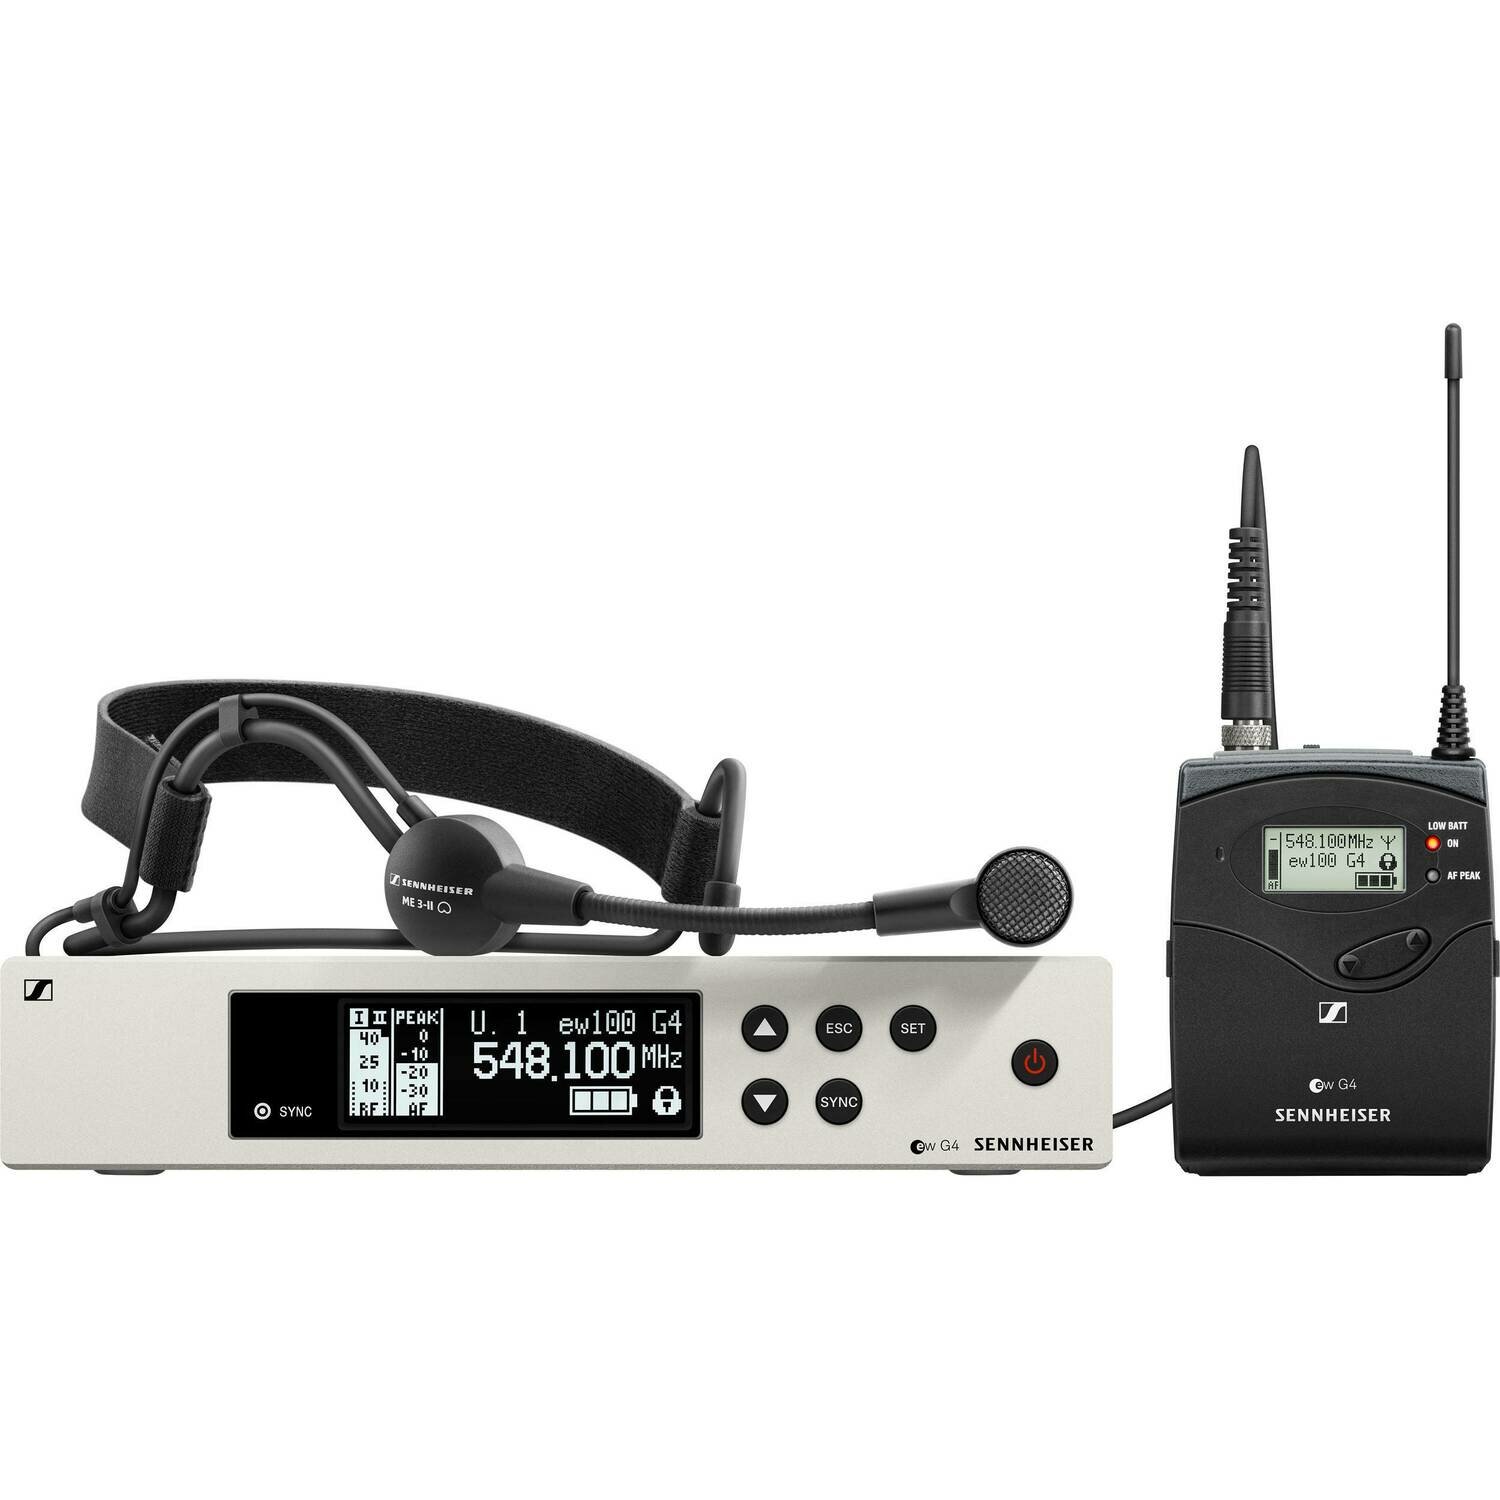 Sennheiser EW 100 G4-ME3 Wireless Cardioid Headset Microphone System (A1: 470 to 516 MHz)
#SEEW100G43A1 MFR #EW 100 G4-ME3-A1